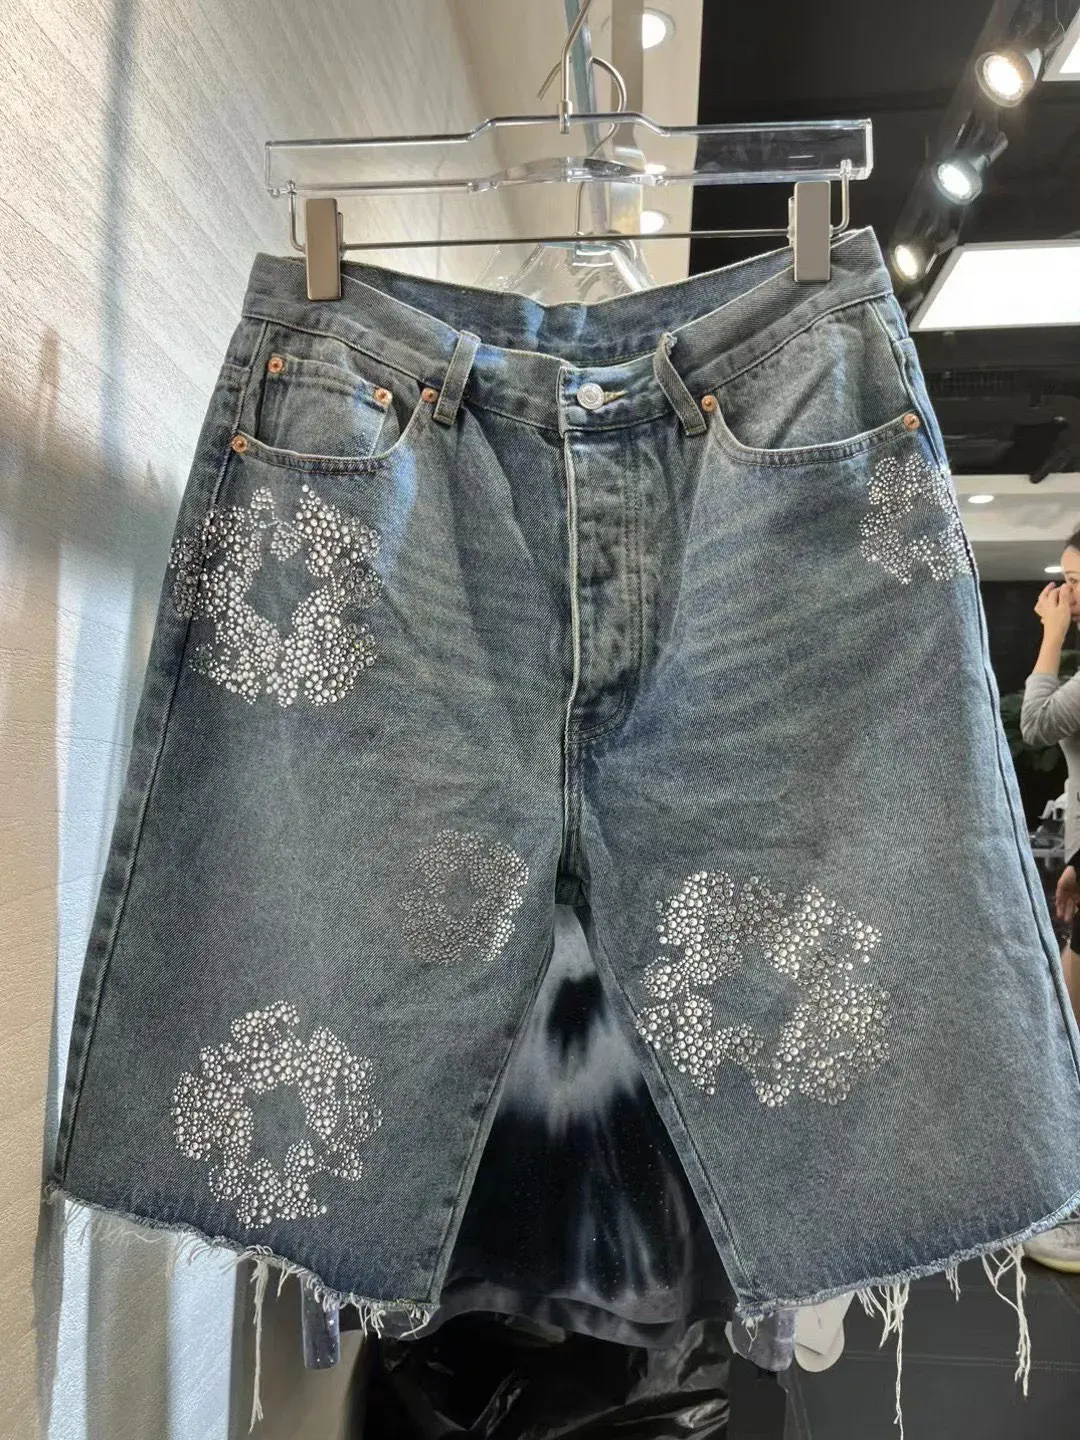 Clearance! Men's Denim Shorts Summer Jeans Pocket Shorts Skate Board  Fashion Pants Plus Size Cargo Shorts Flat Front Shorts For Men - Walmart.com